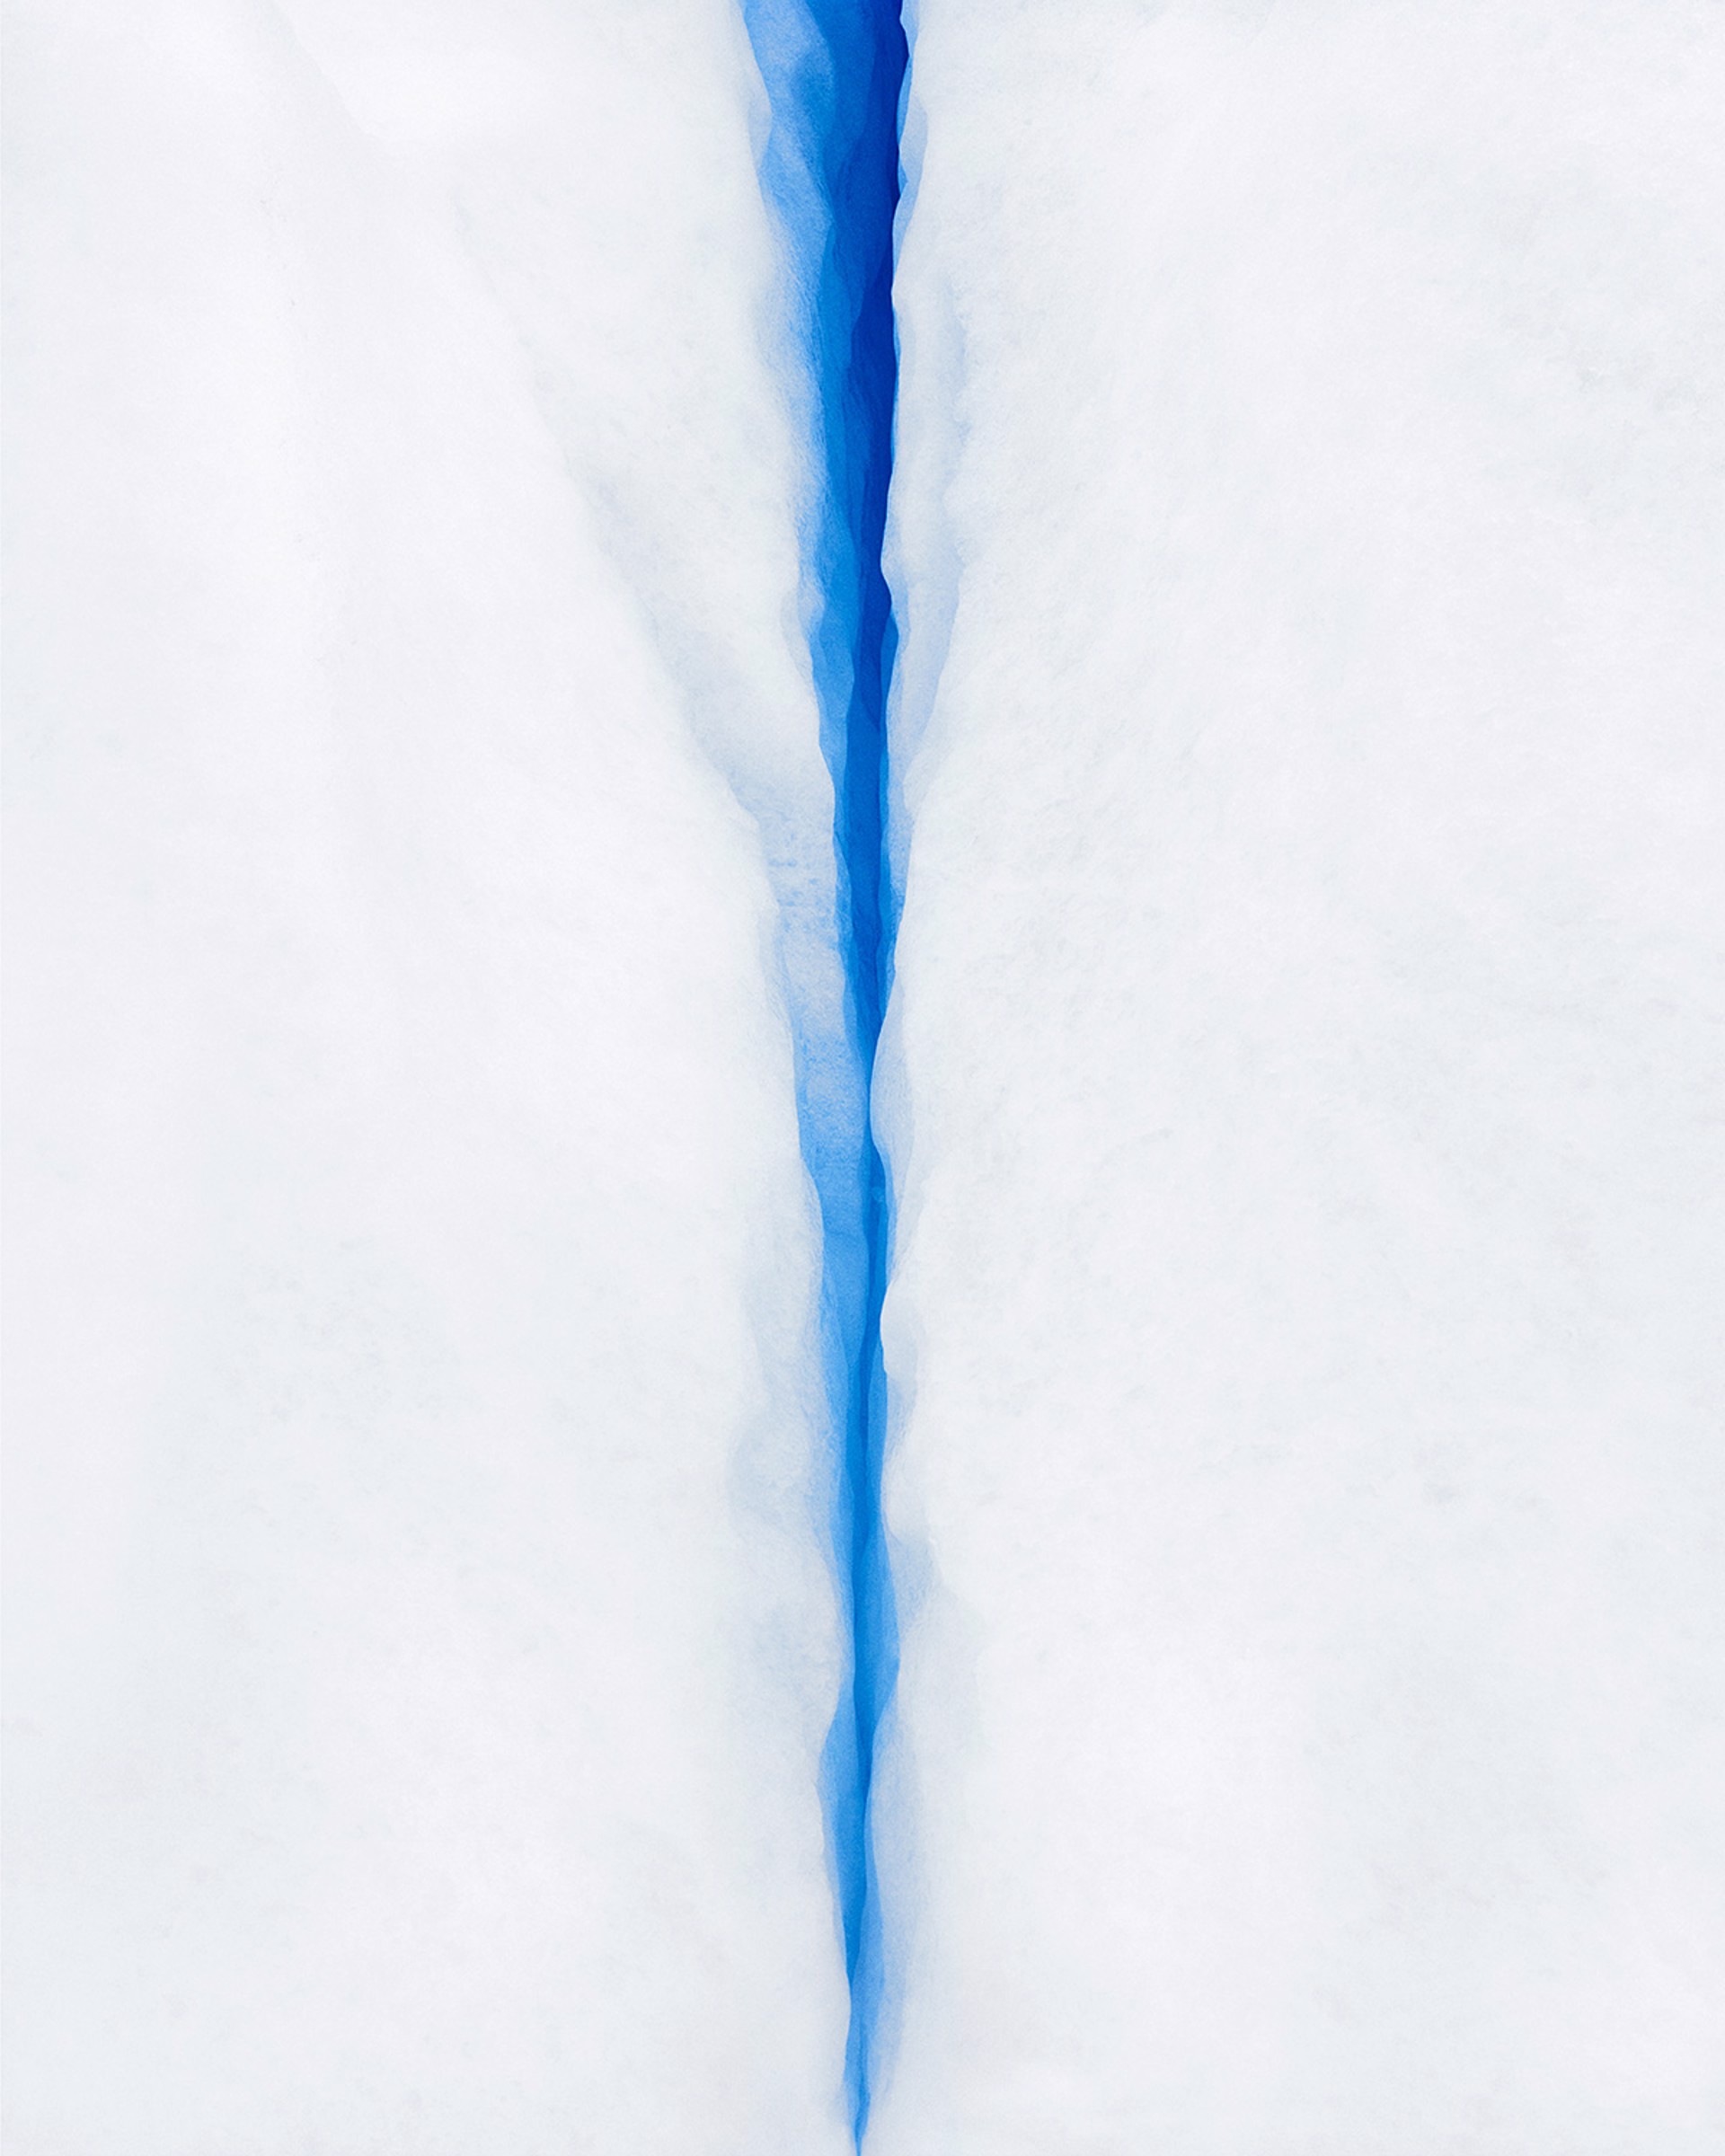 Glacier #23 by Jonathan Smith